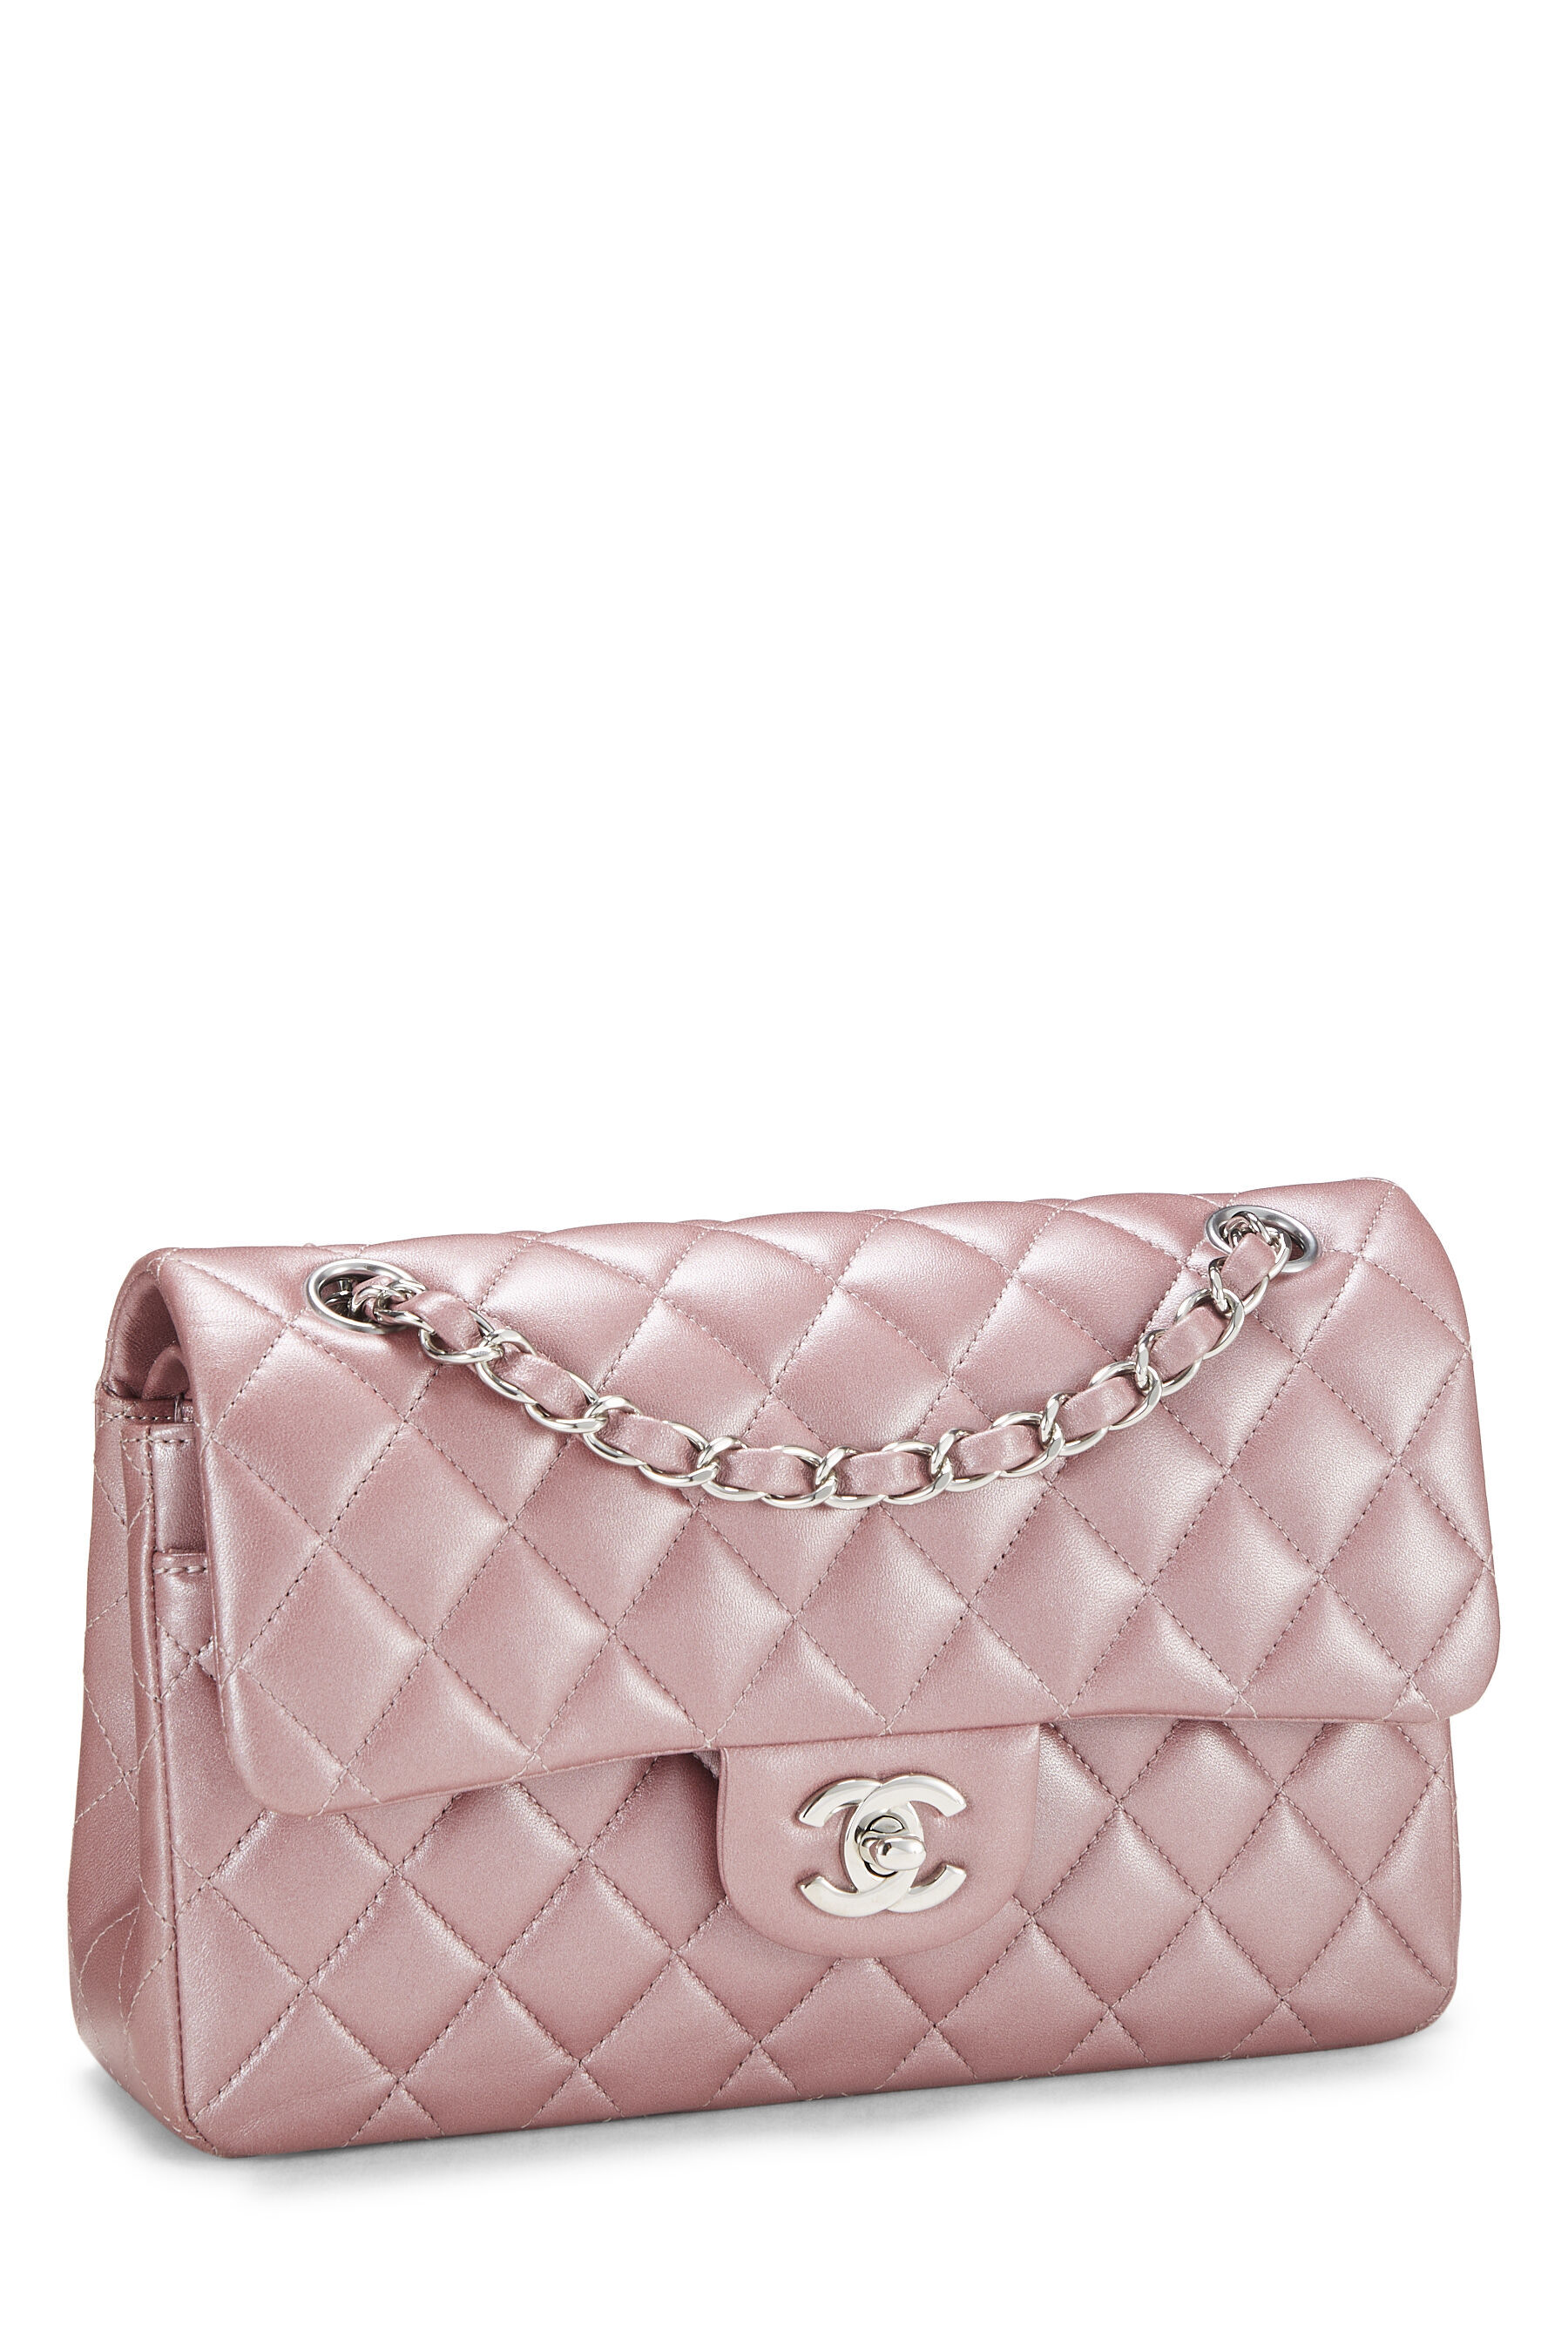 Chanel Metallic Pink Stingray Small Boy Bag  Worlds Best